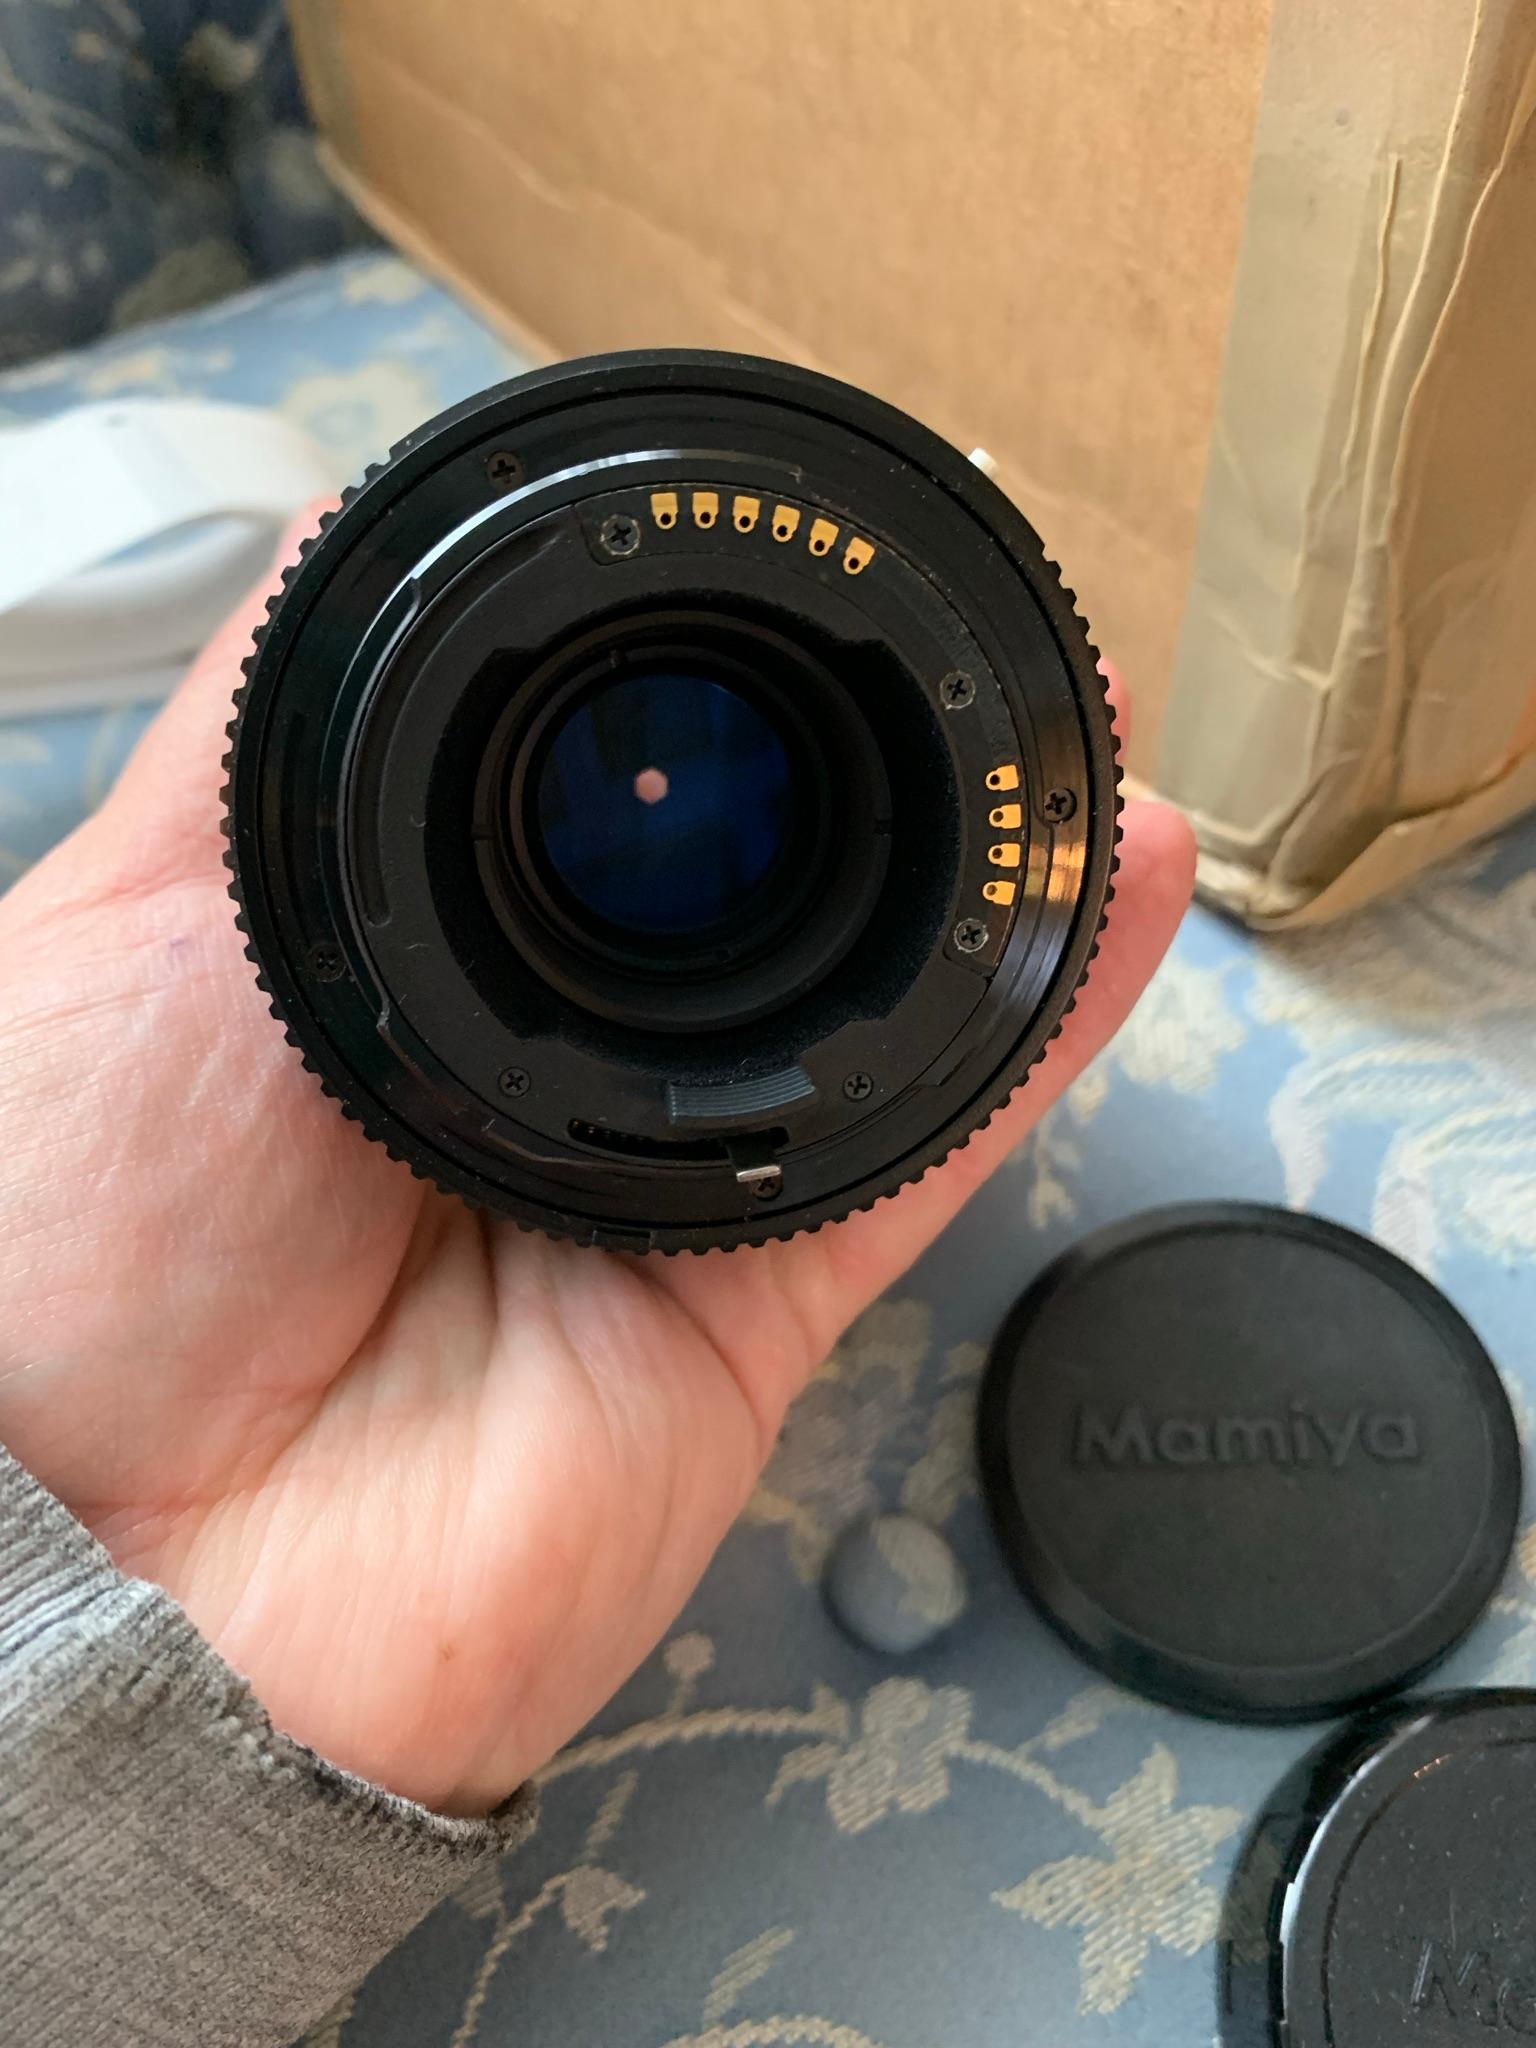 Mamiya ZE-2 Camera with Lenses, Bag & Accessories